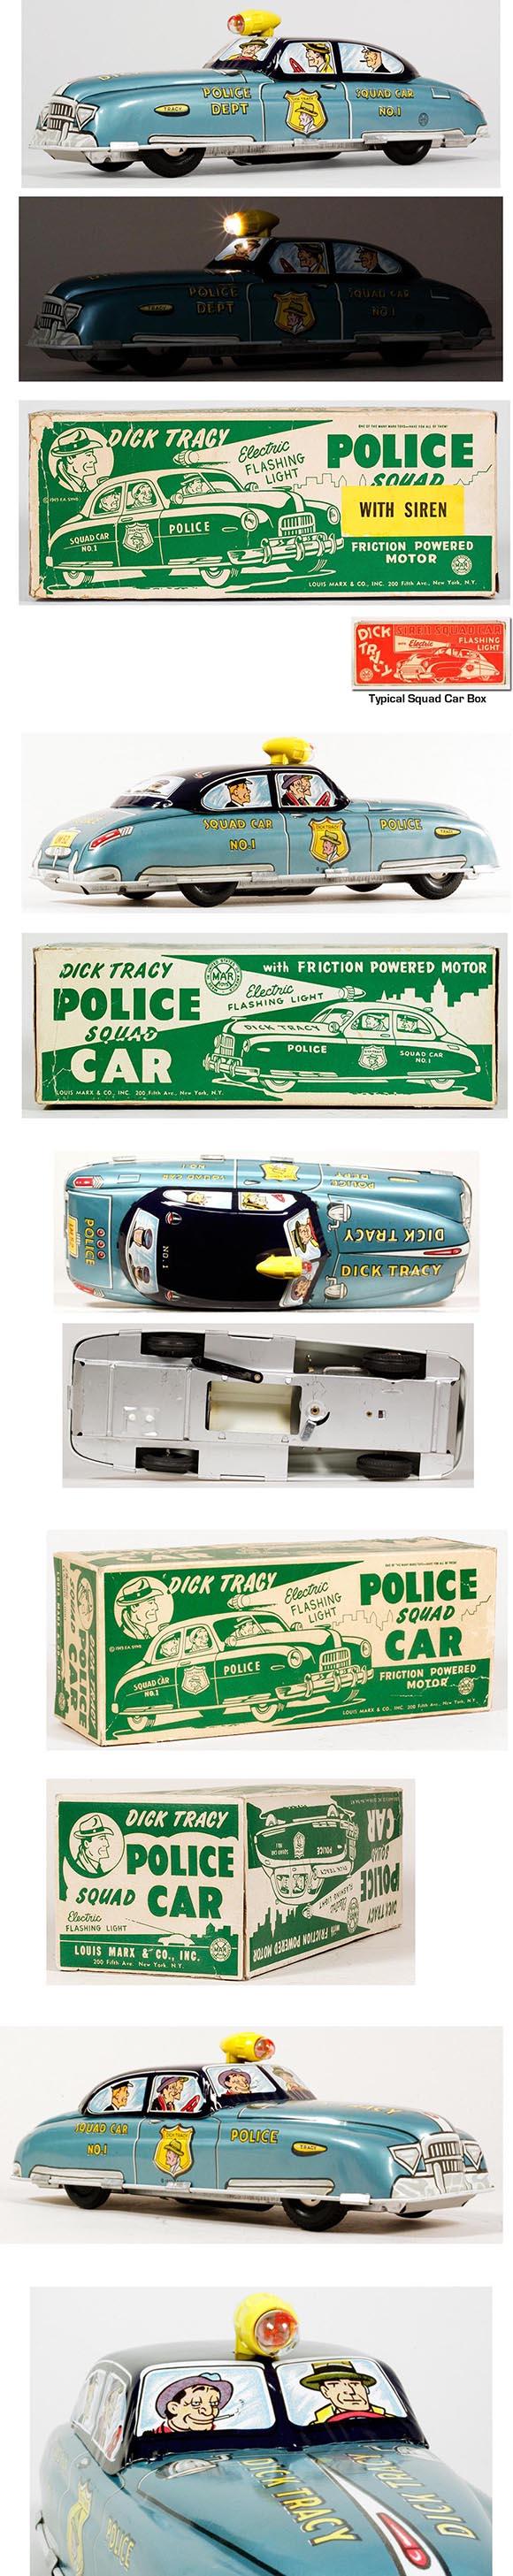 1949 Marx Dick Tracy Police Squad Car in Original Box